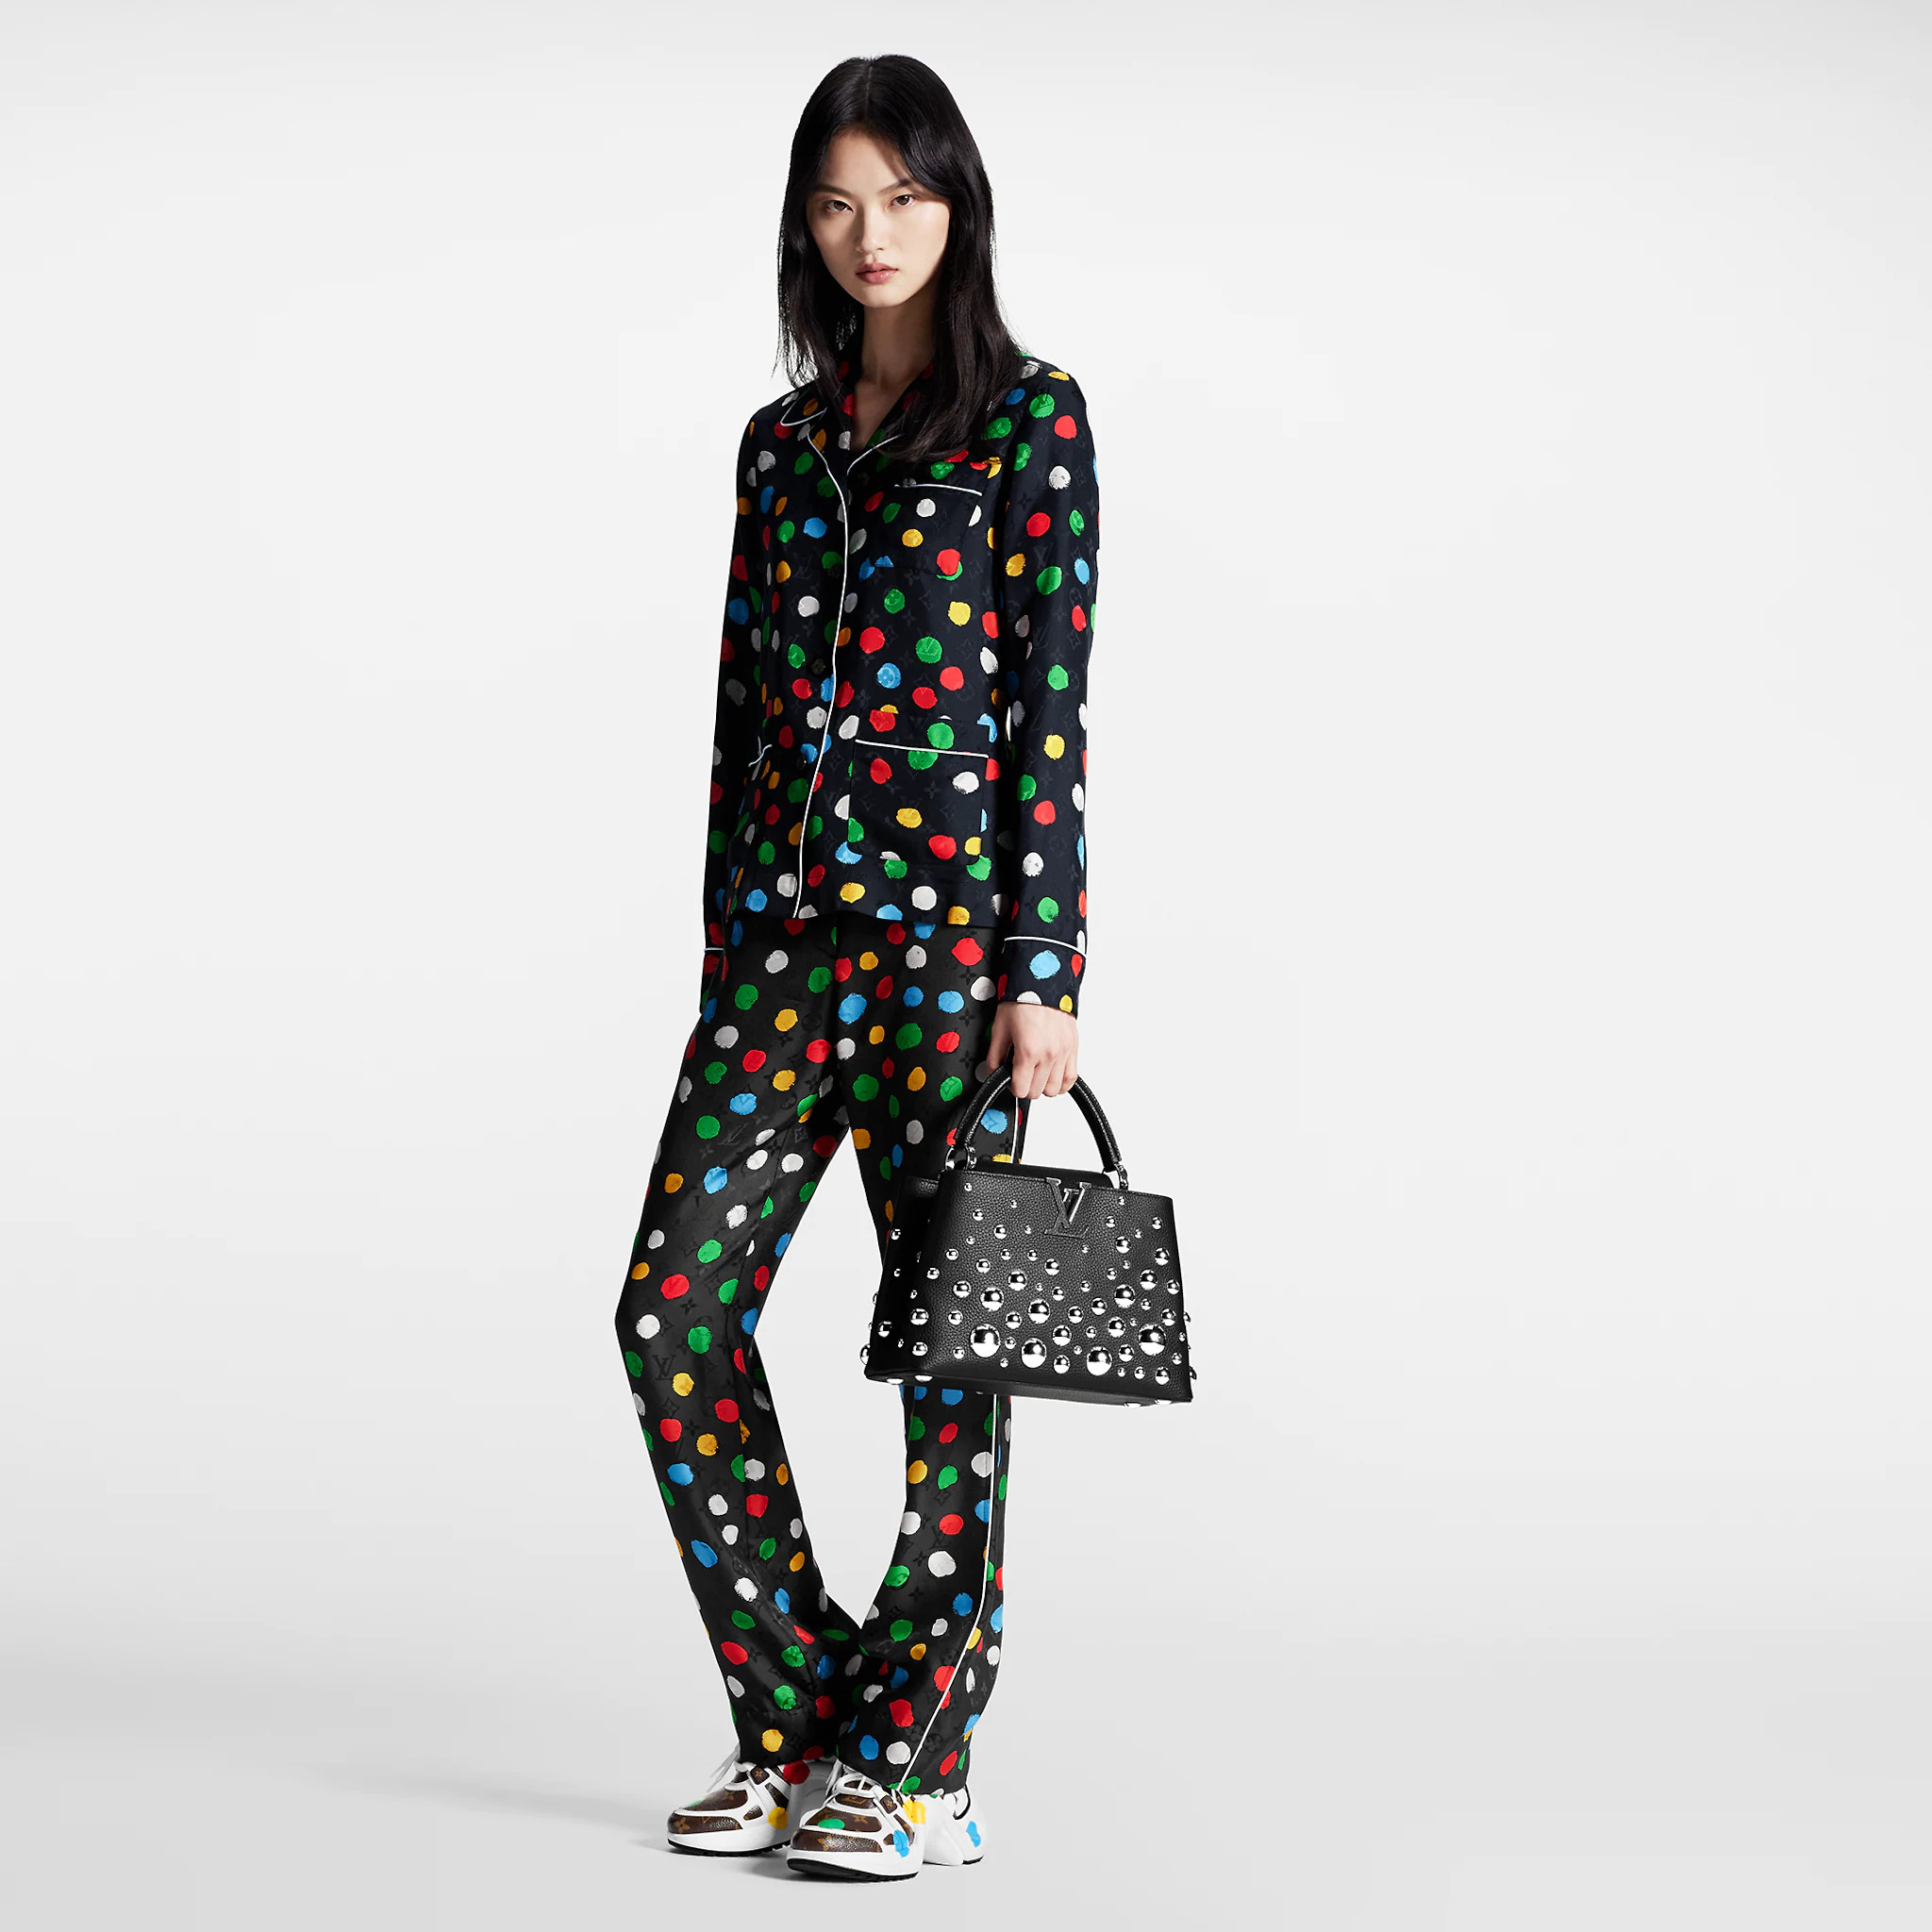 Marian Rivera Wears Louis Vuitton X Yayoi Kusama Pajamas Worth Over P230,000